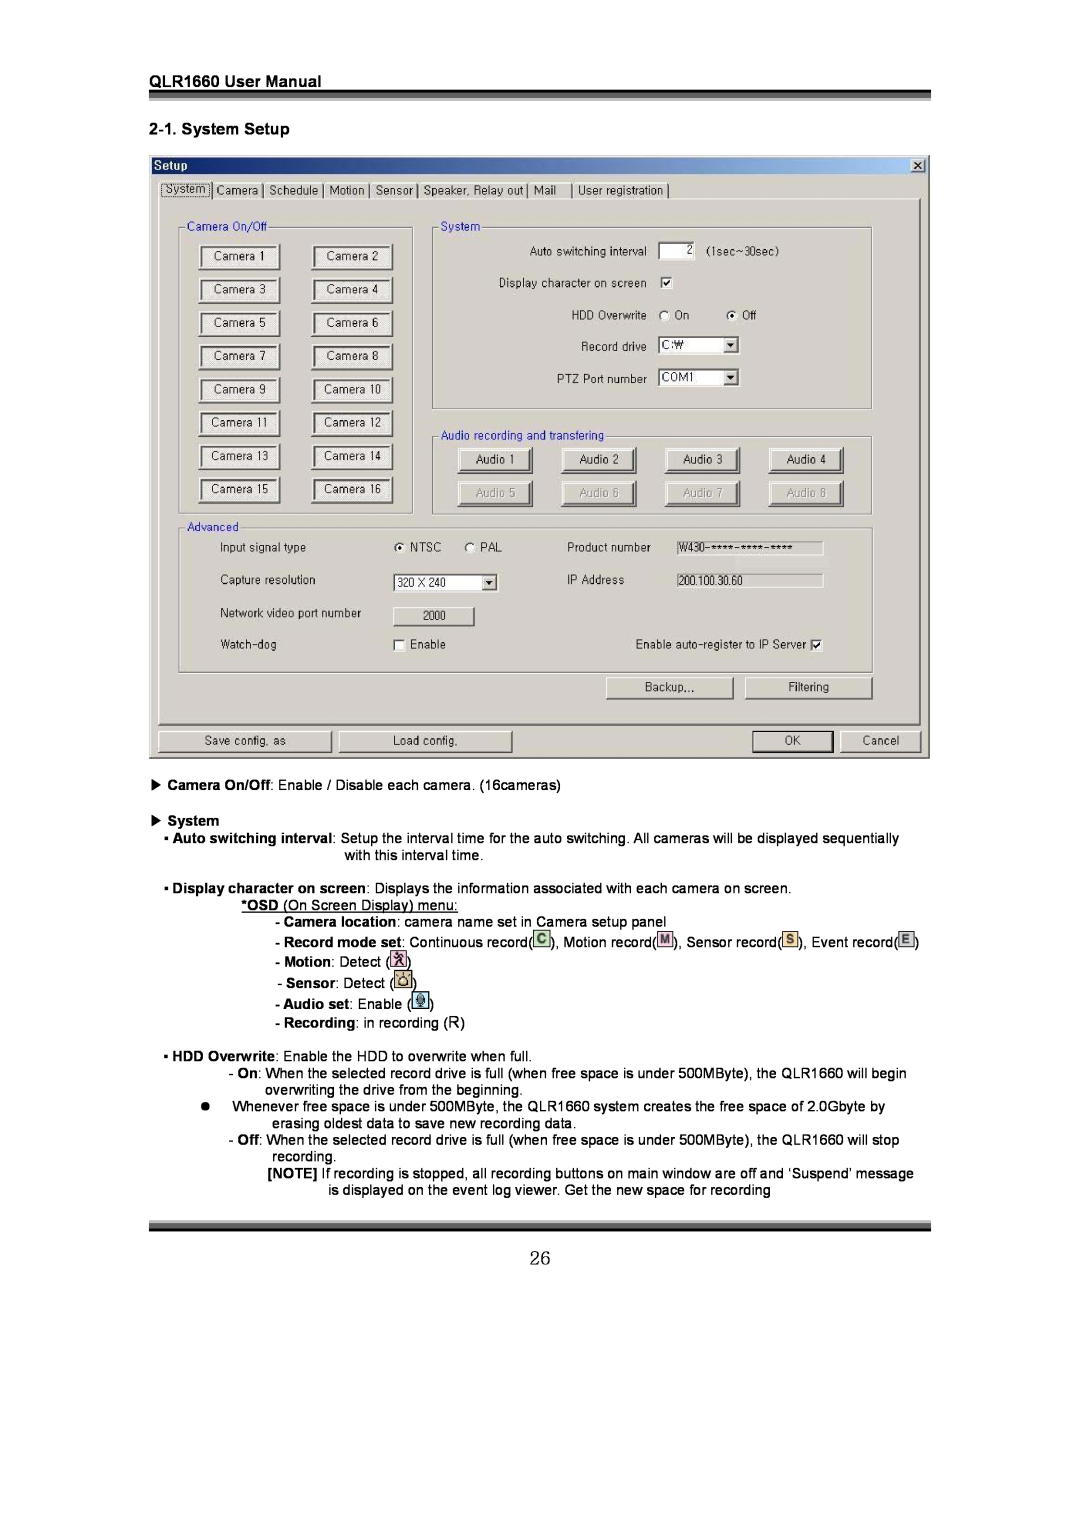 LOREX Technology instruction manual QLR1660 User Manual 2-1.System Setup 